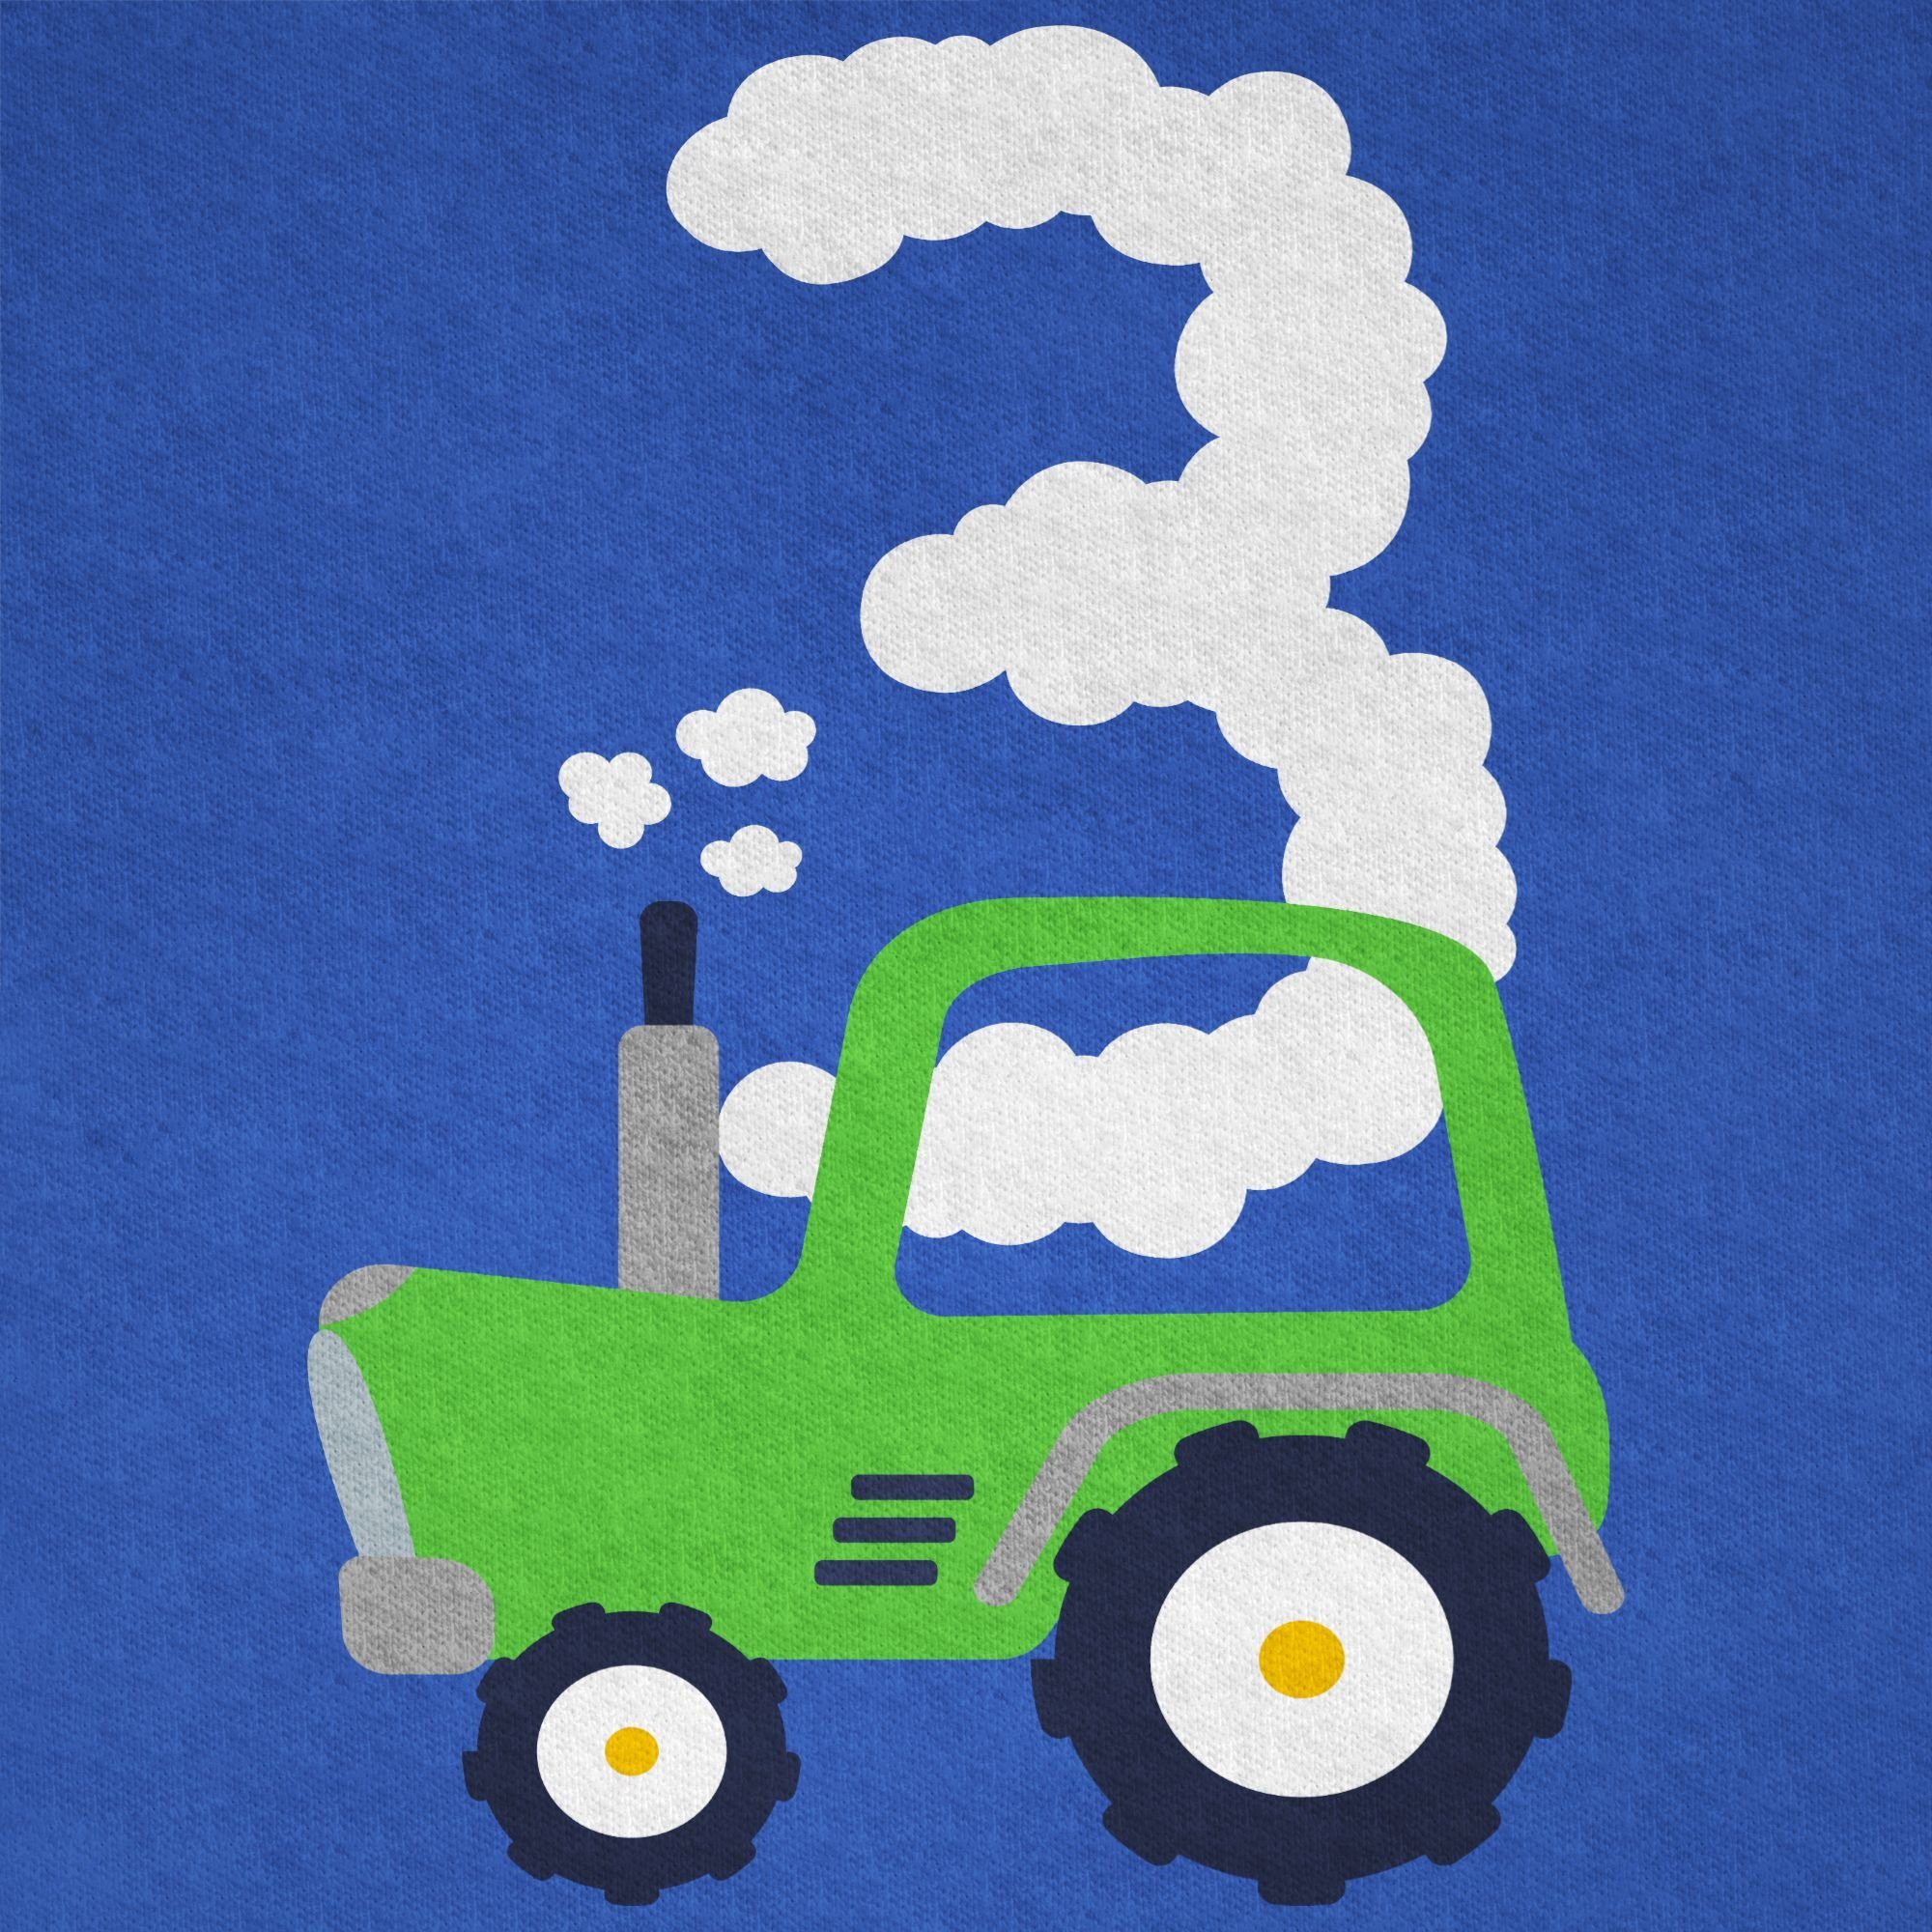 3. Geburtstag Royalblau T-Shirt Drei Shirtracer Geburtstag Traktor 2